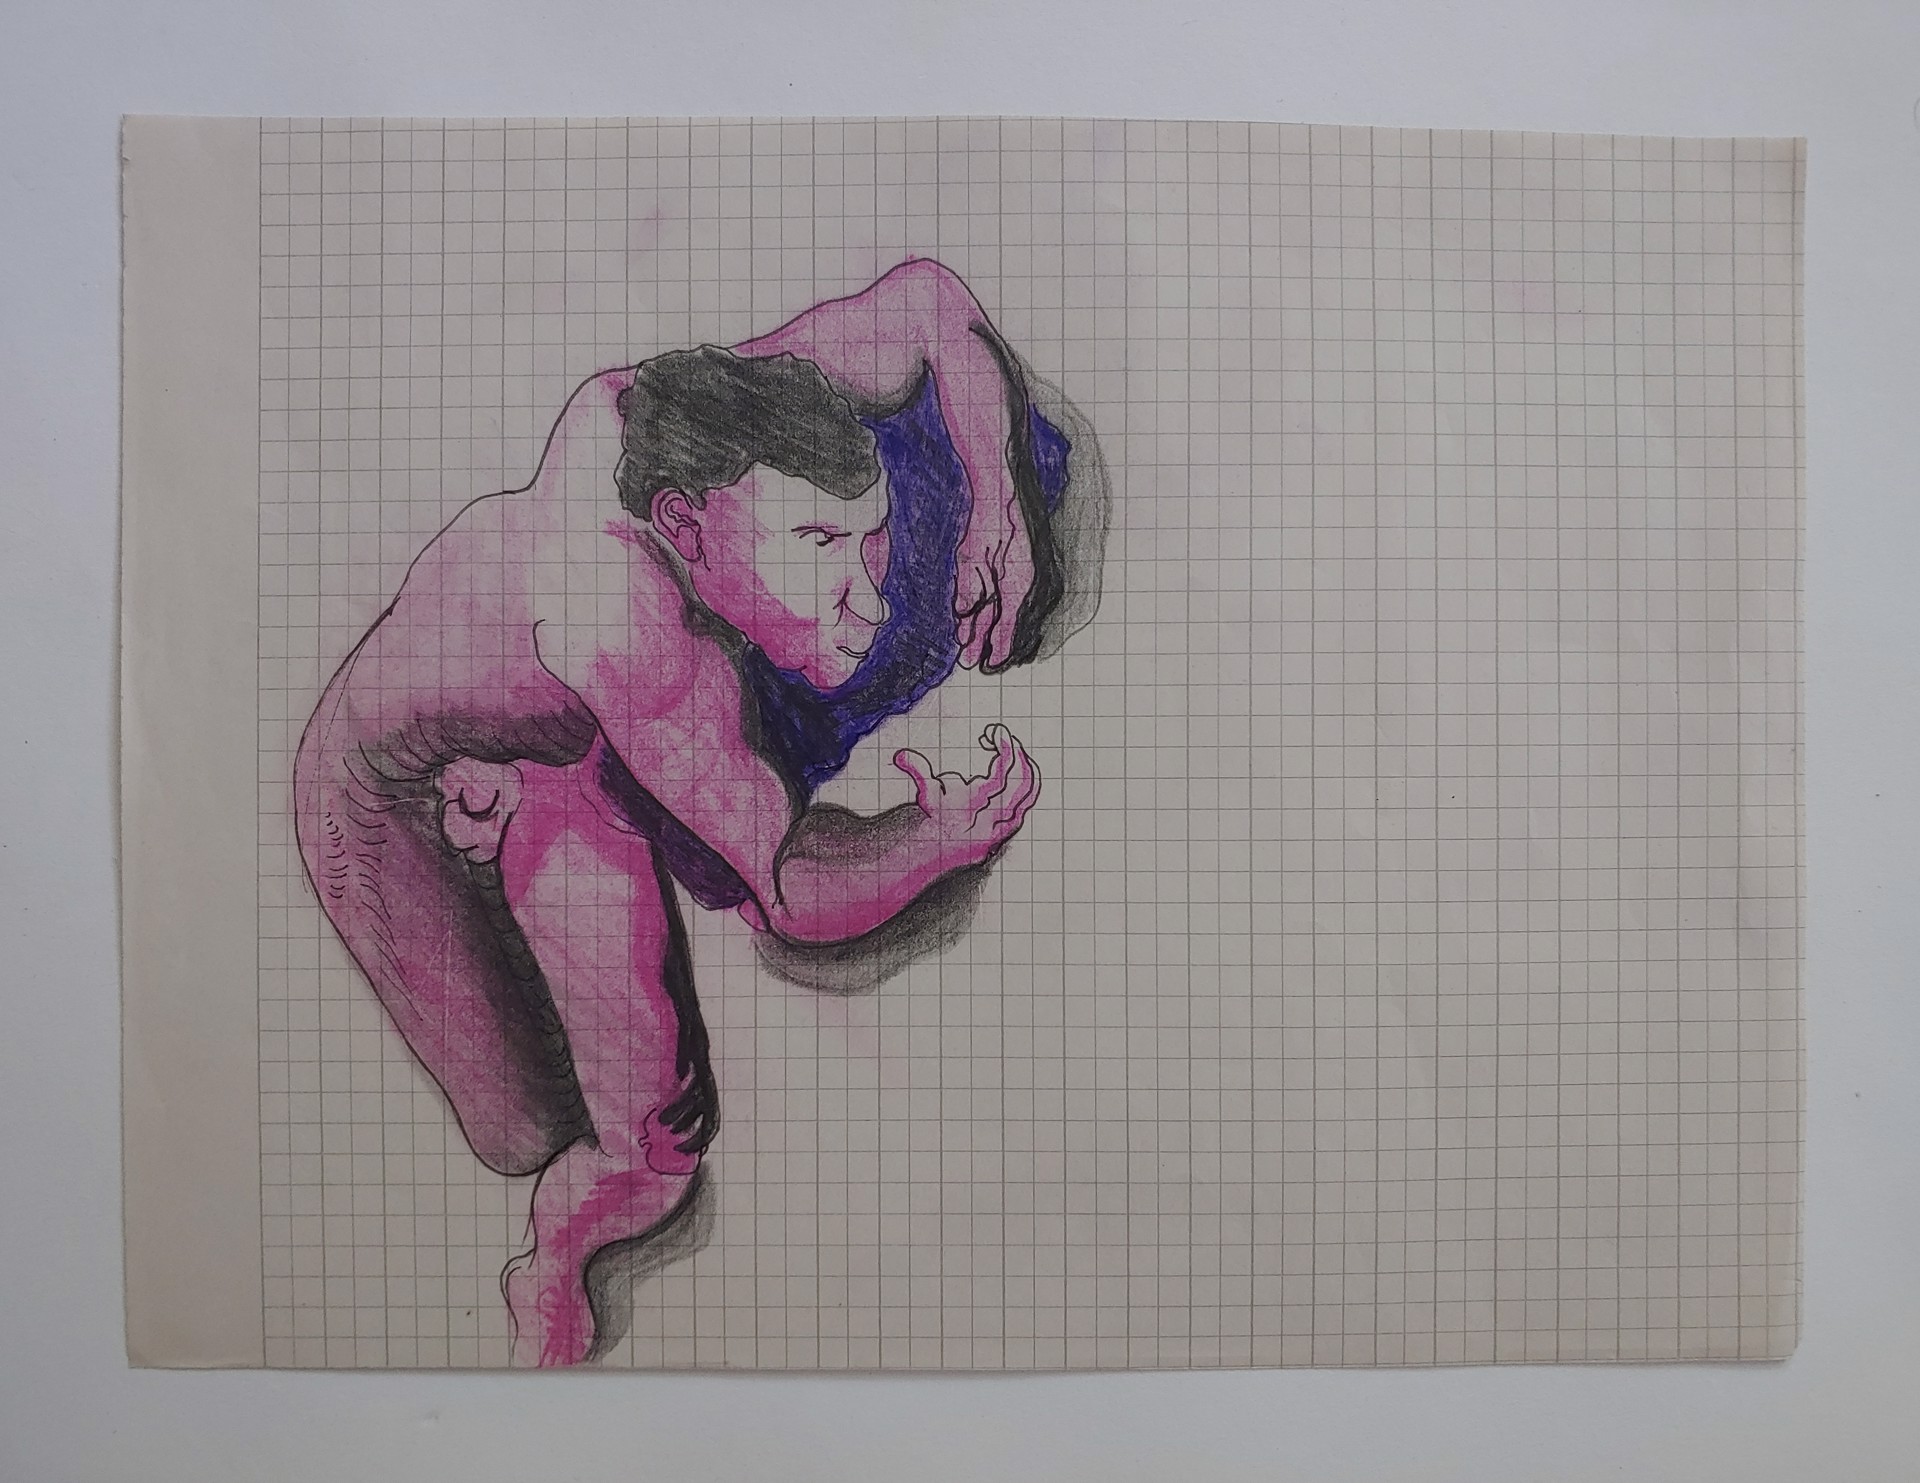 Man in Motion - Drawing by David Amdur